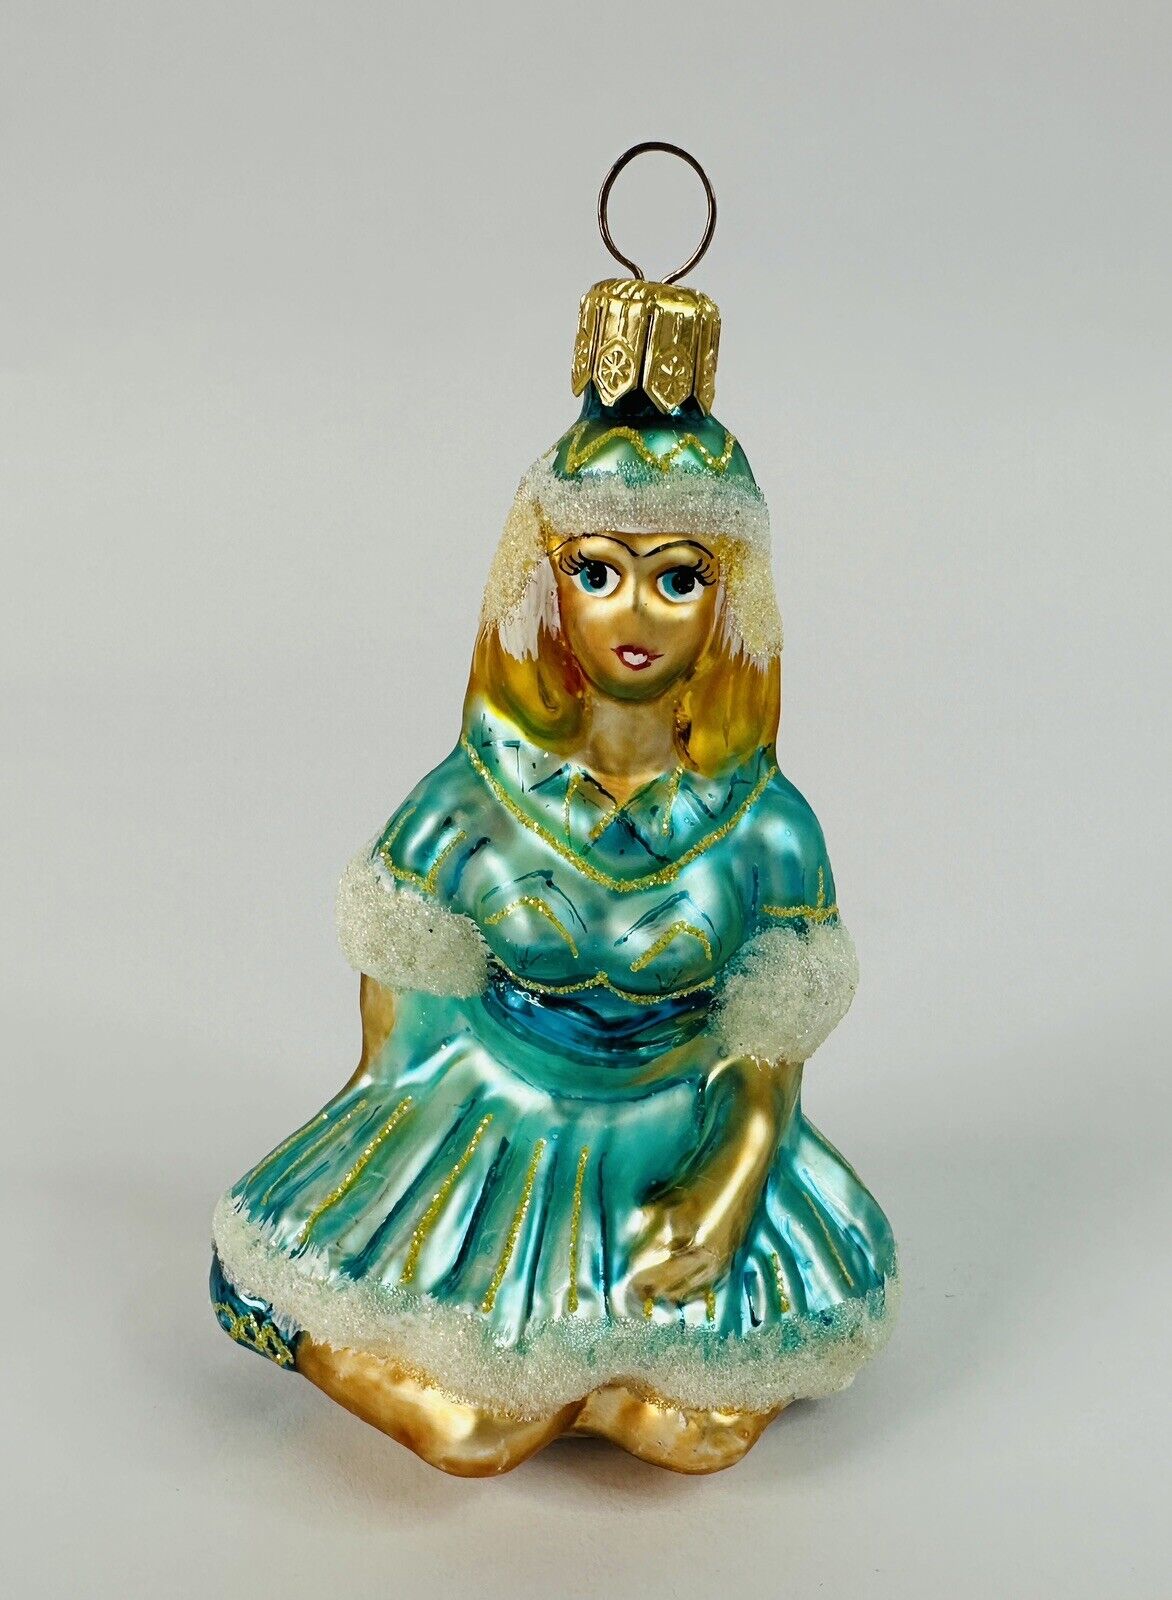 Christopher Radko “Snow Fairy” Hand-Blown Glass Christmas Ornament